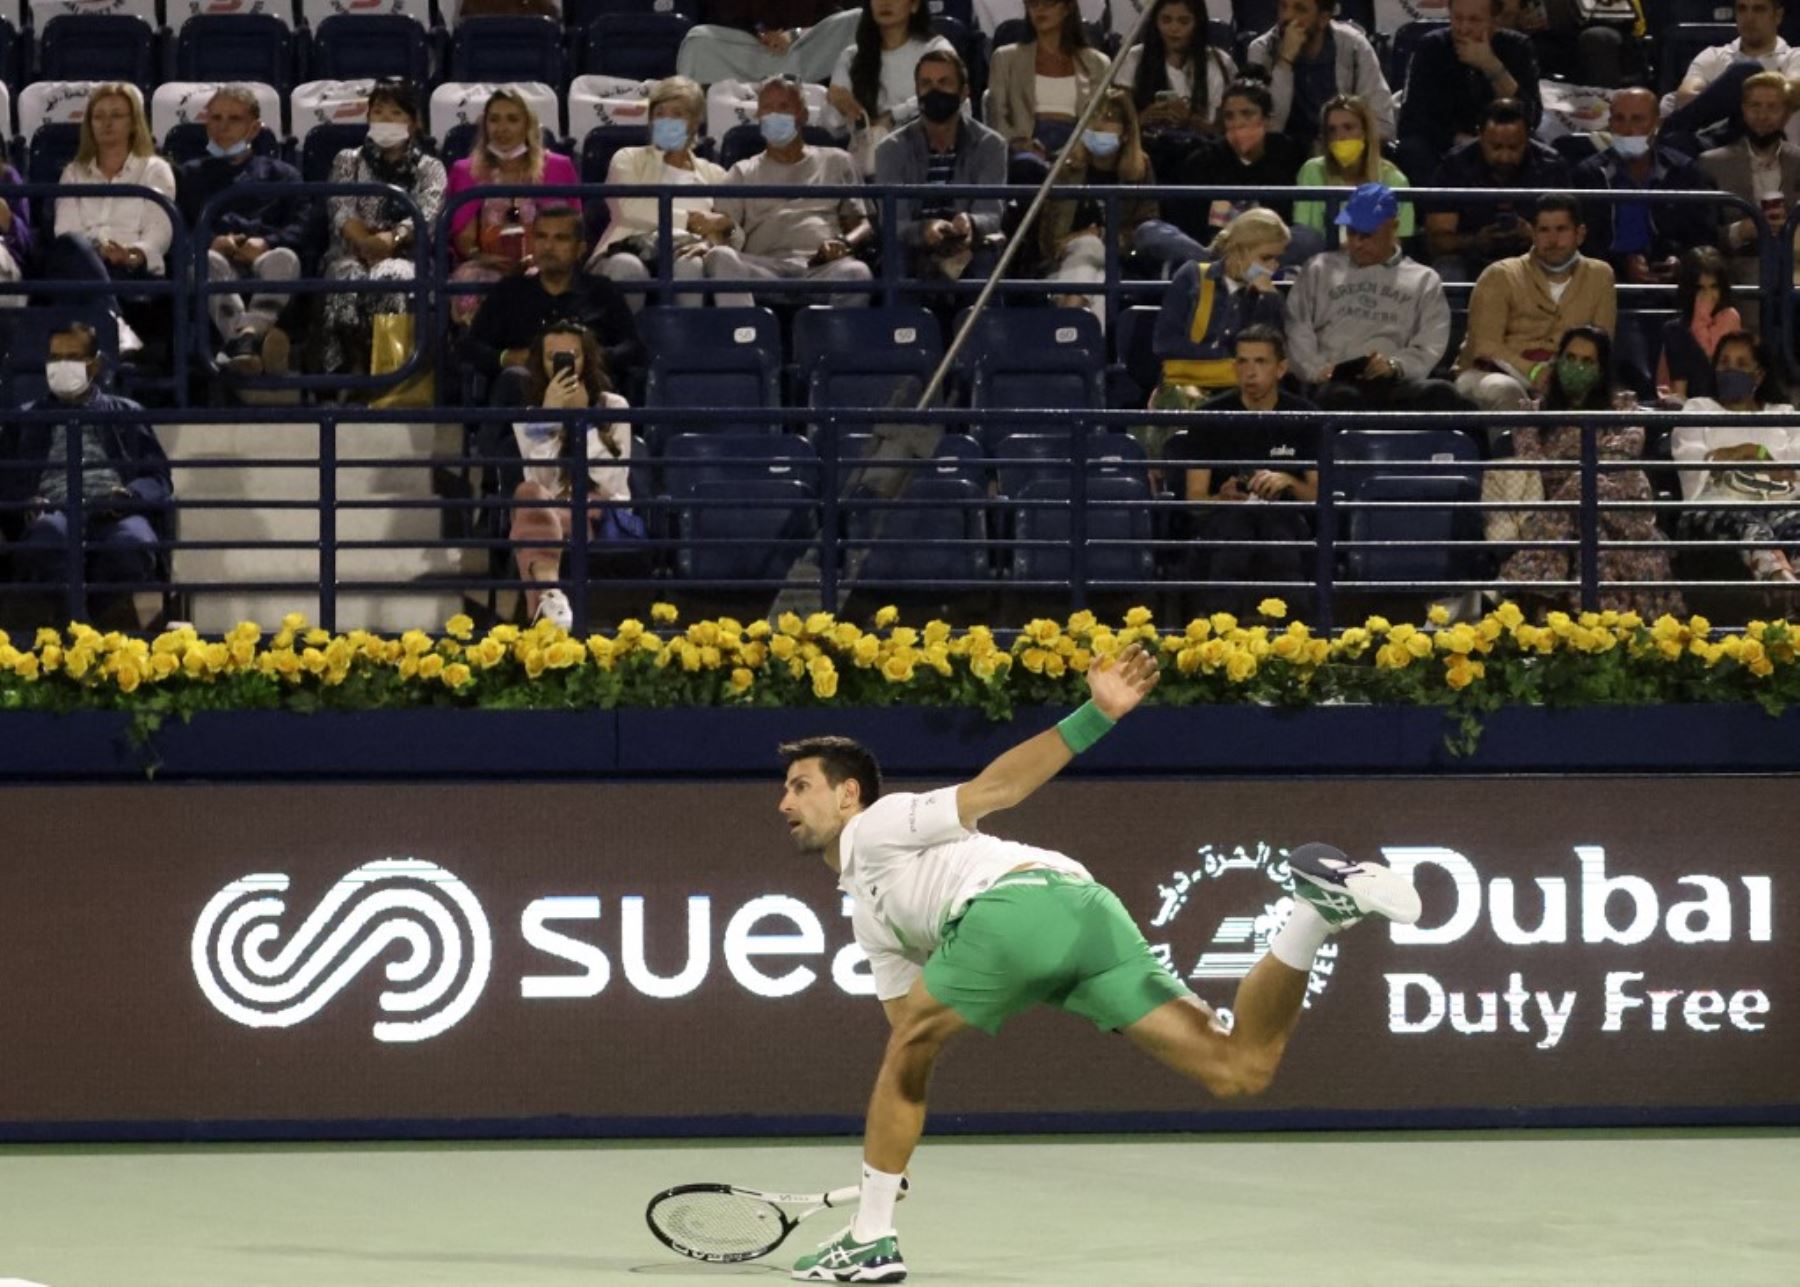 Novak Djokovic estuvo de espaldas al triunfo en la jornada del torneo en Dubái